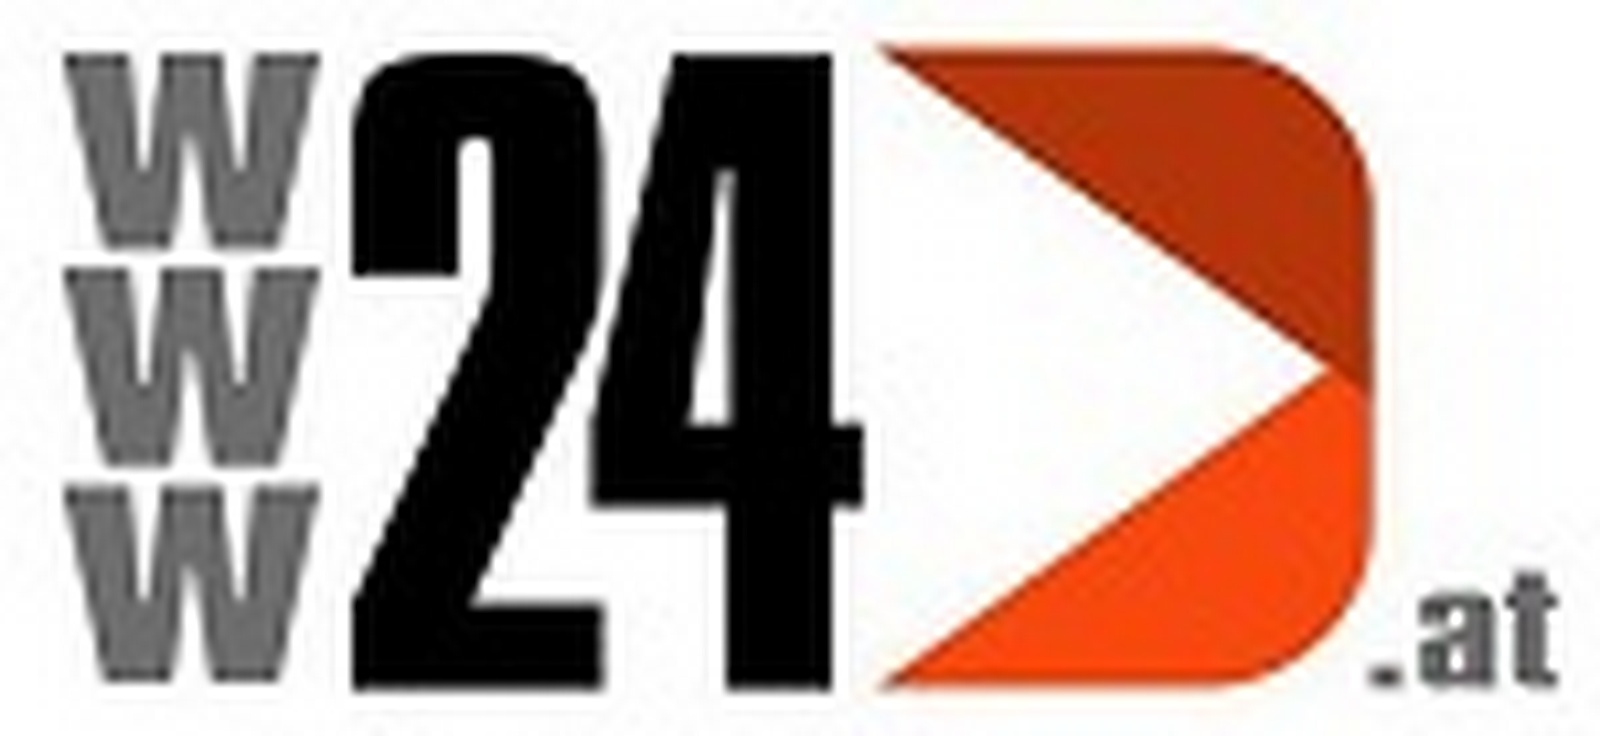 WWW24 Internet Services